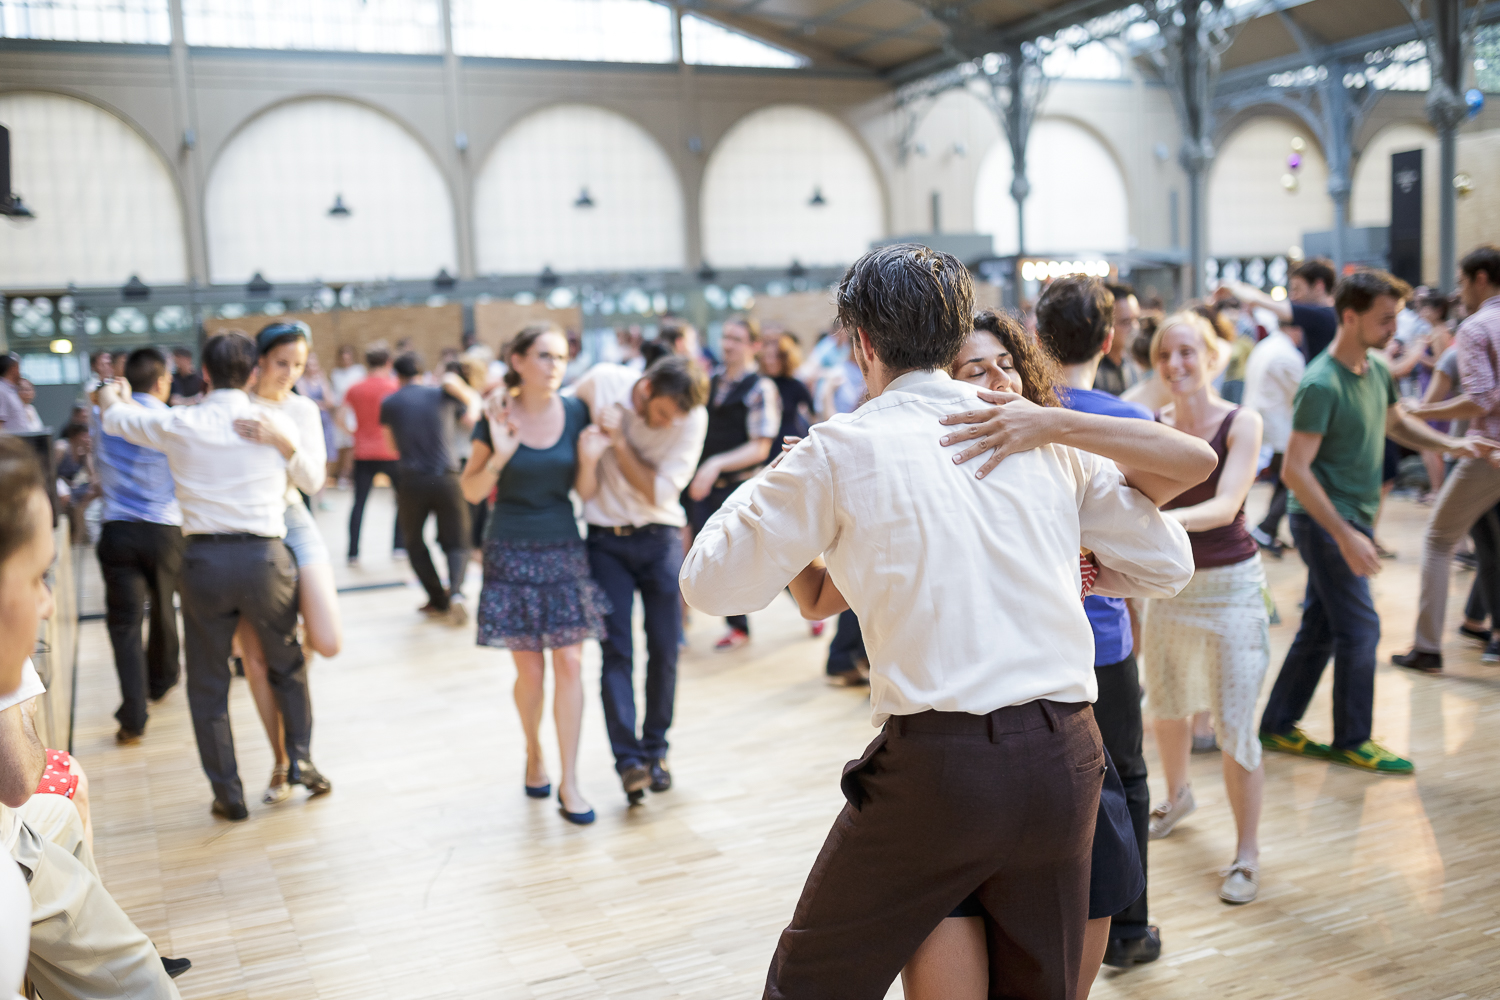  Bal Swing au Carreau du Temple - Photo Credit: For Dancers Only (http://d.pr/1fEEY) 